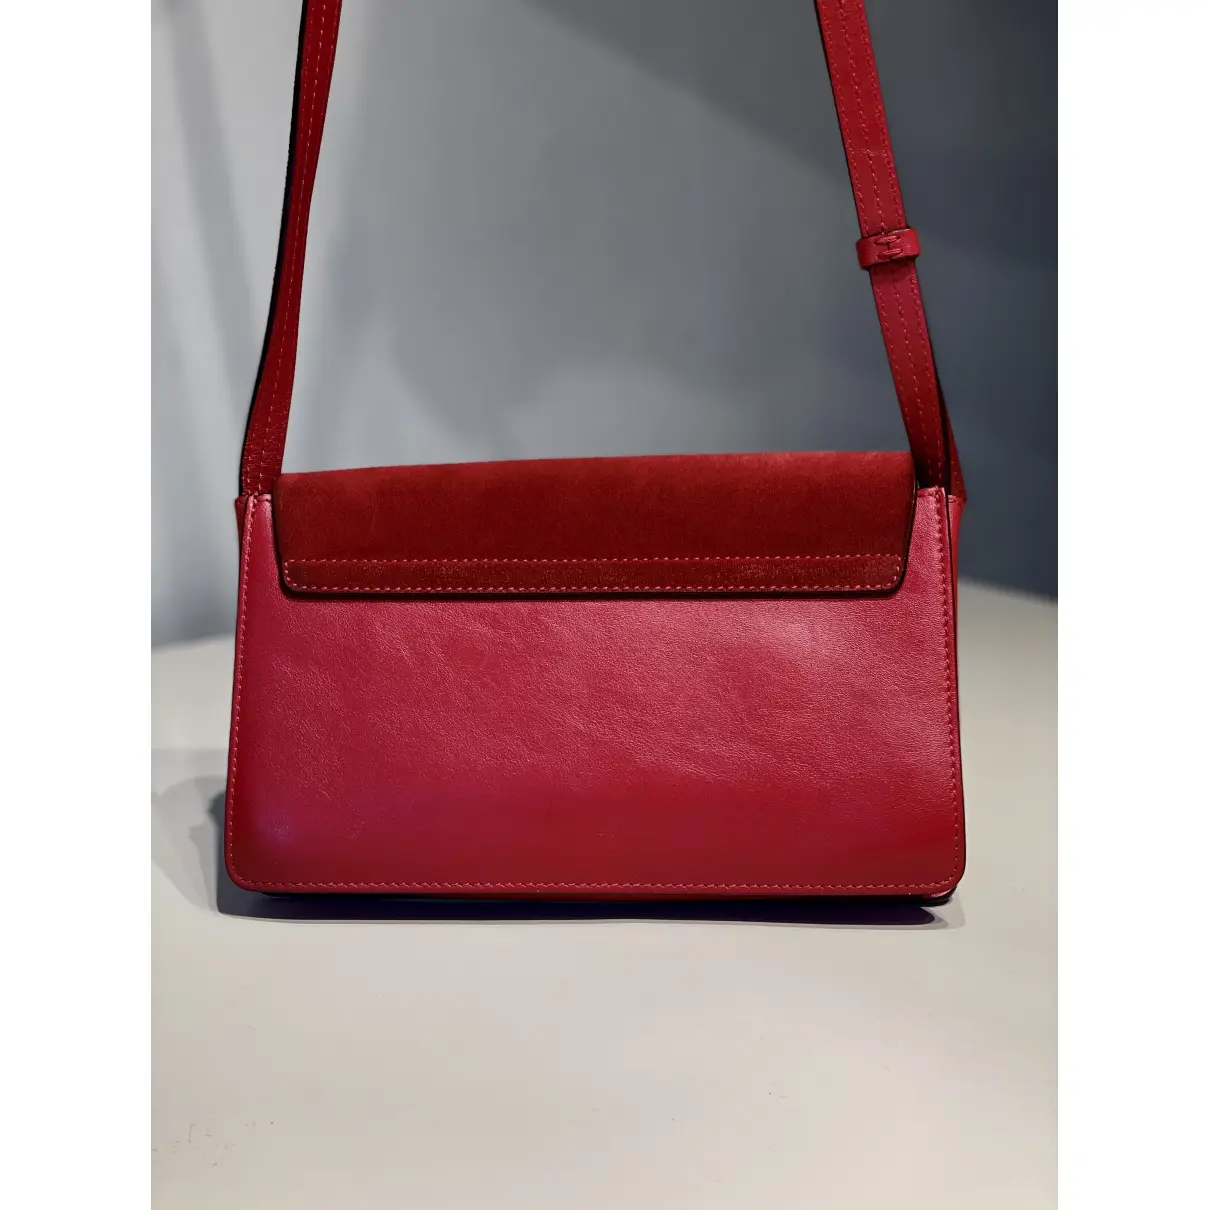 Buy Chloé Faye leather bag online